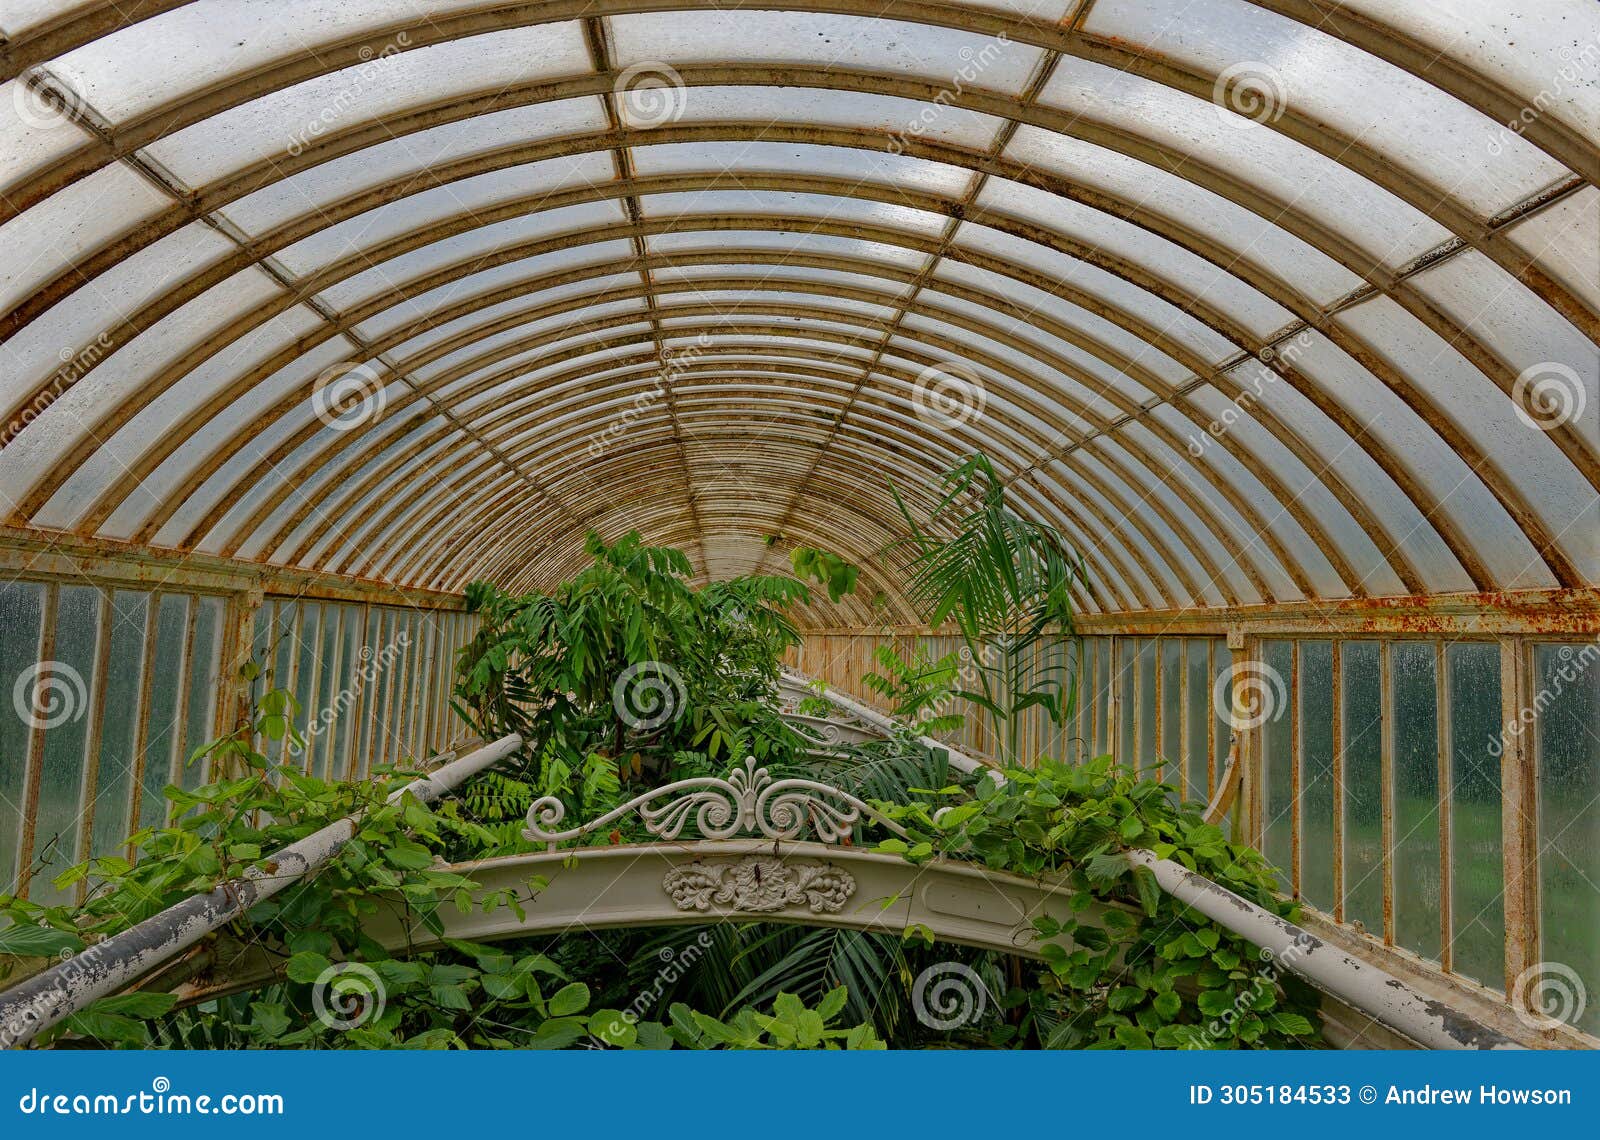 london, kew gardens: victorian green house